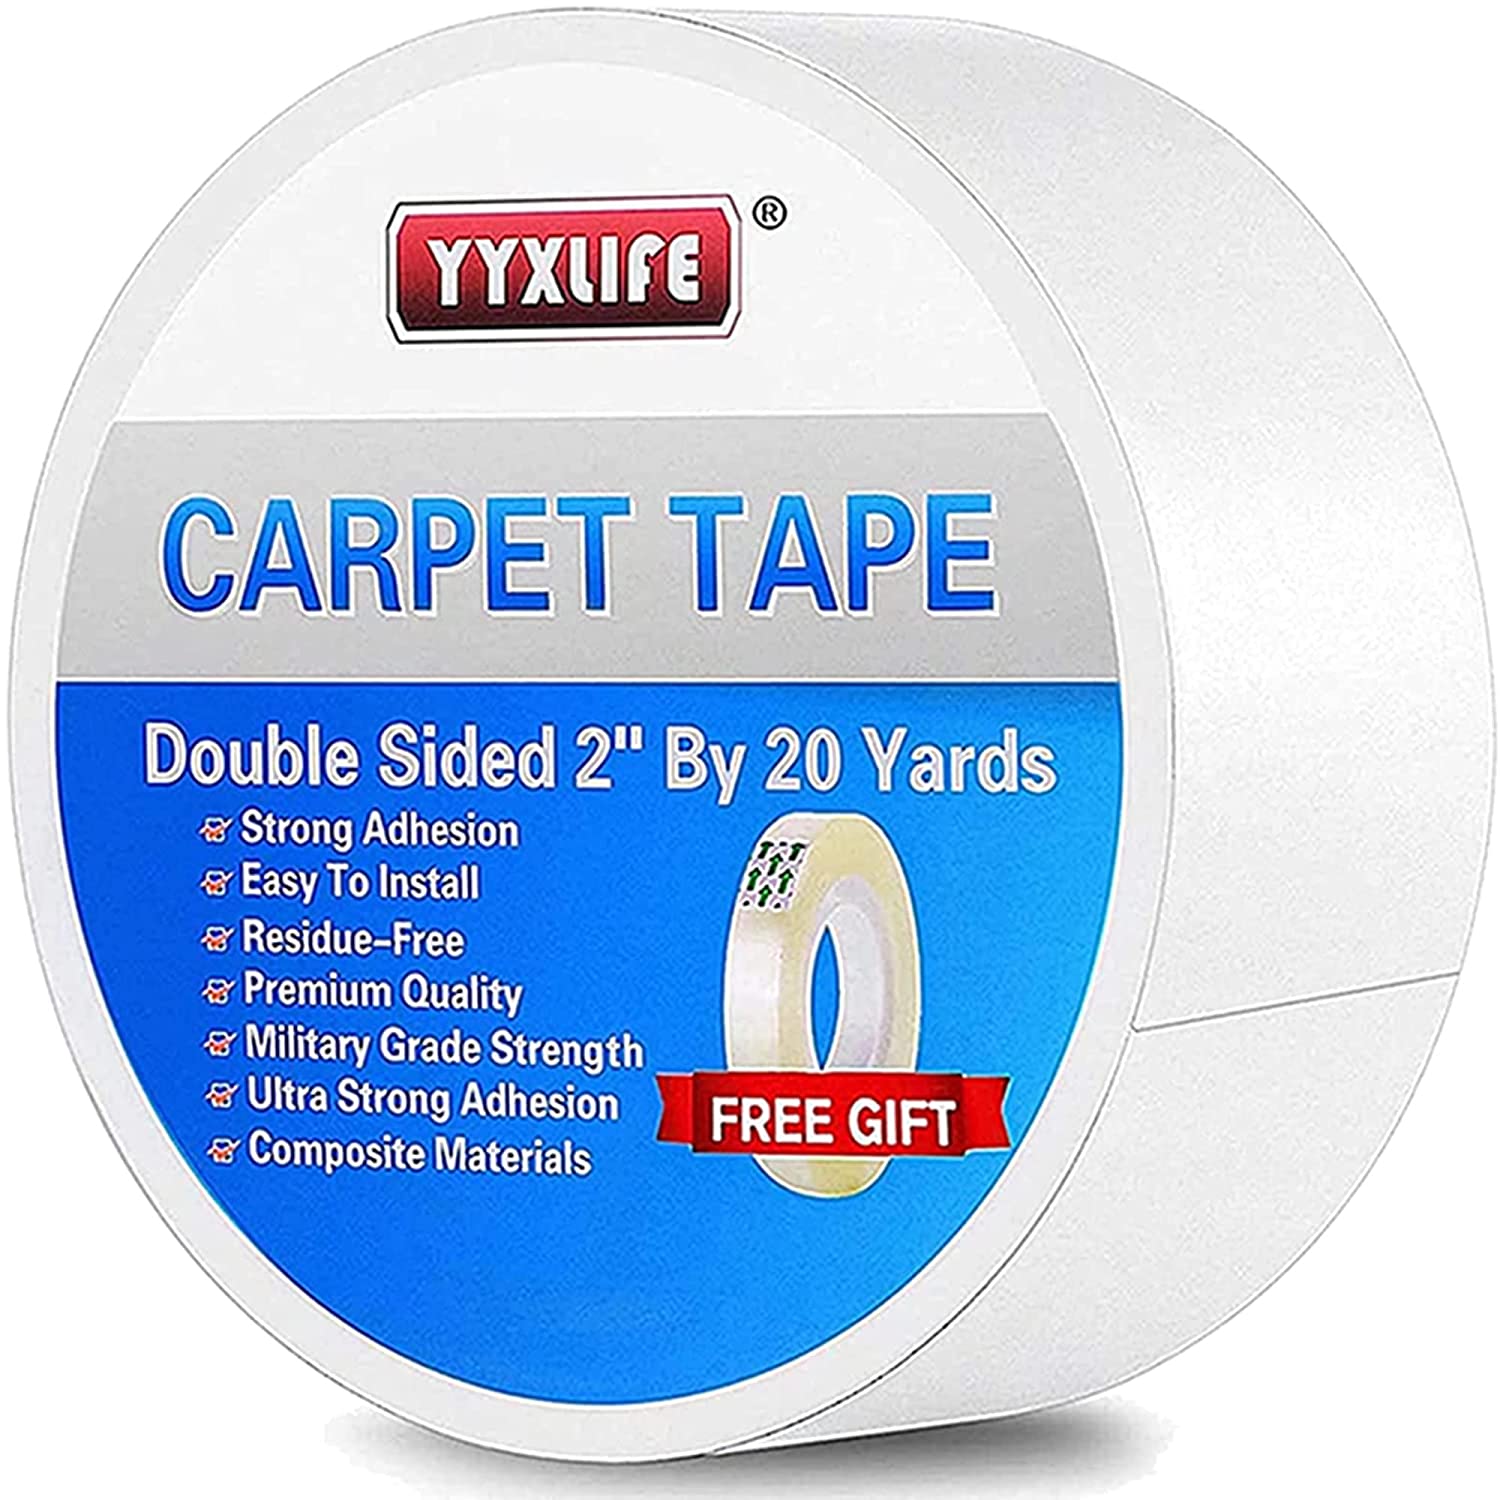 YYXLIFE Double Sided Carpet Tape for Hardwood Floors,Area Rugs Carpet